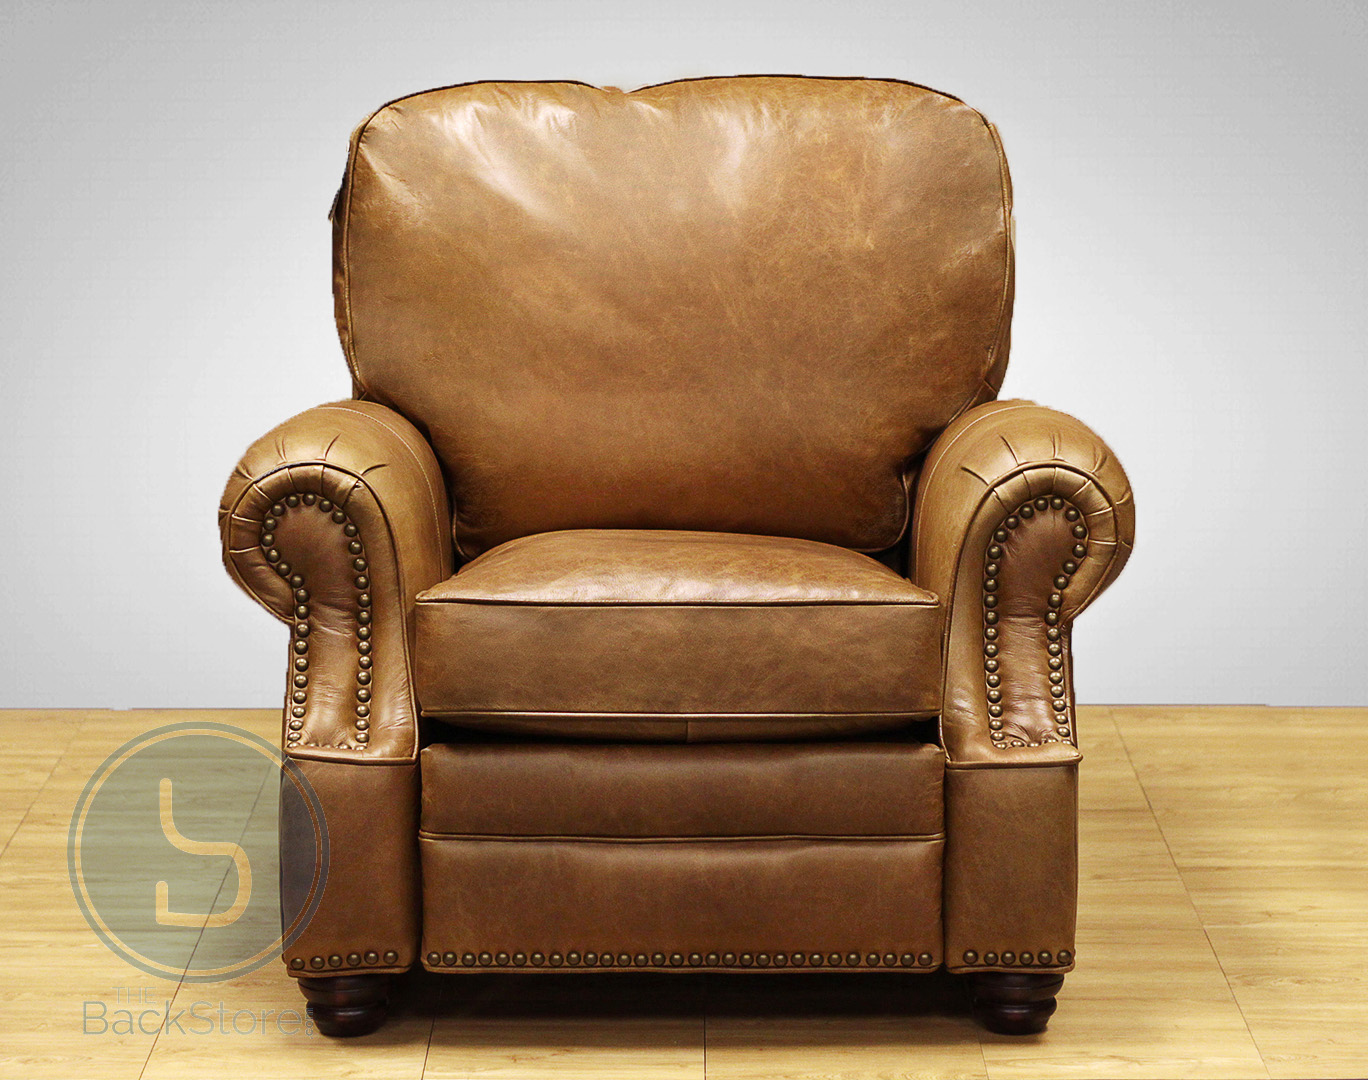 BarcaLounger LongHorn II Reclinier 7-4727 - Saddle Top Grain Leather 5401-16 - Espresso Wood Legs